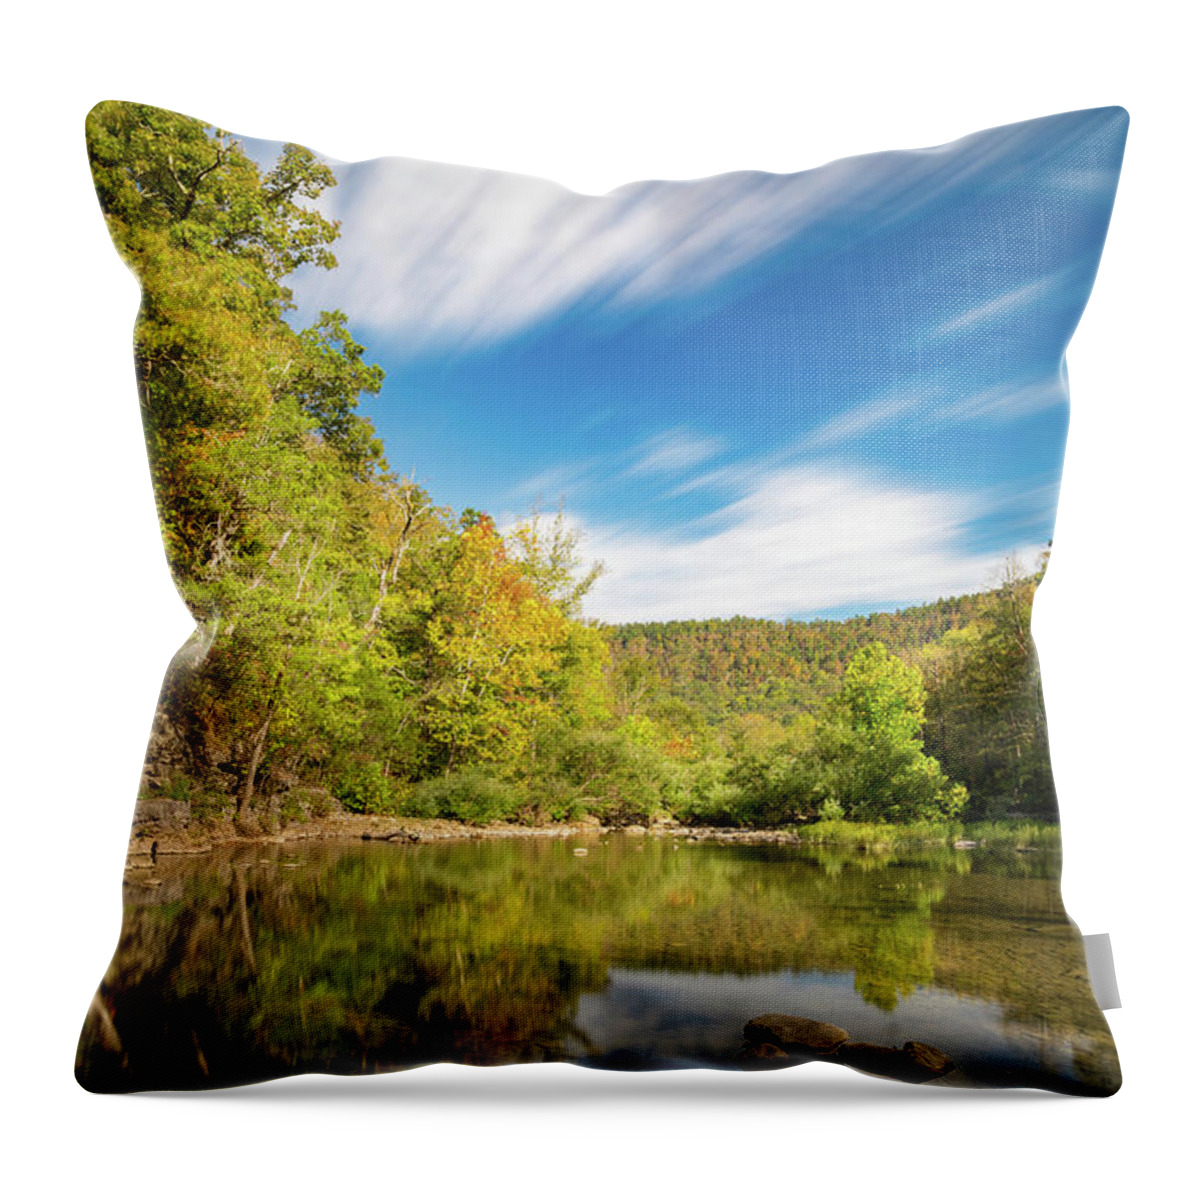 Arkansas Throw Pillow featuring the photograph Long exposure richland creek 2 by Mati Krimerman